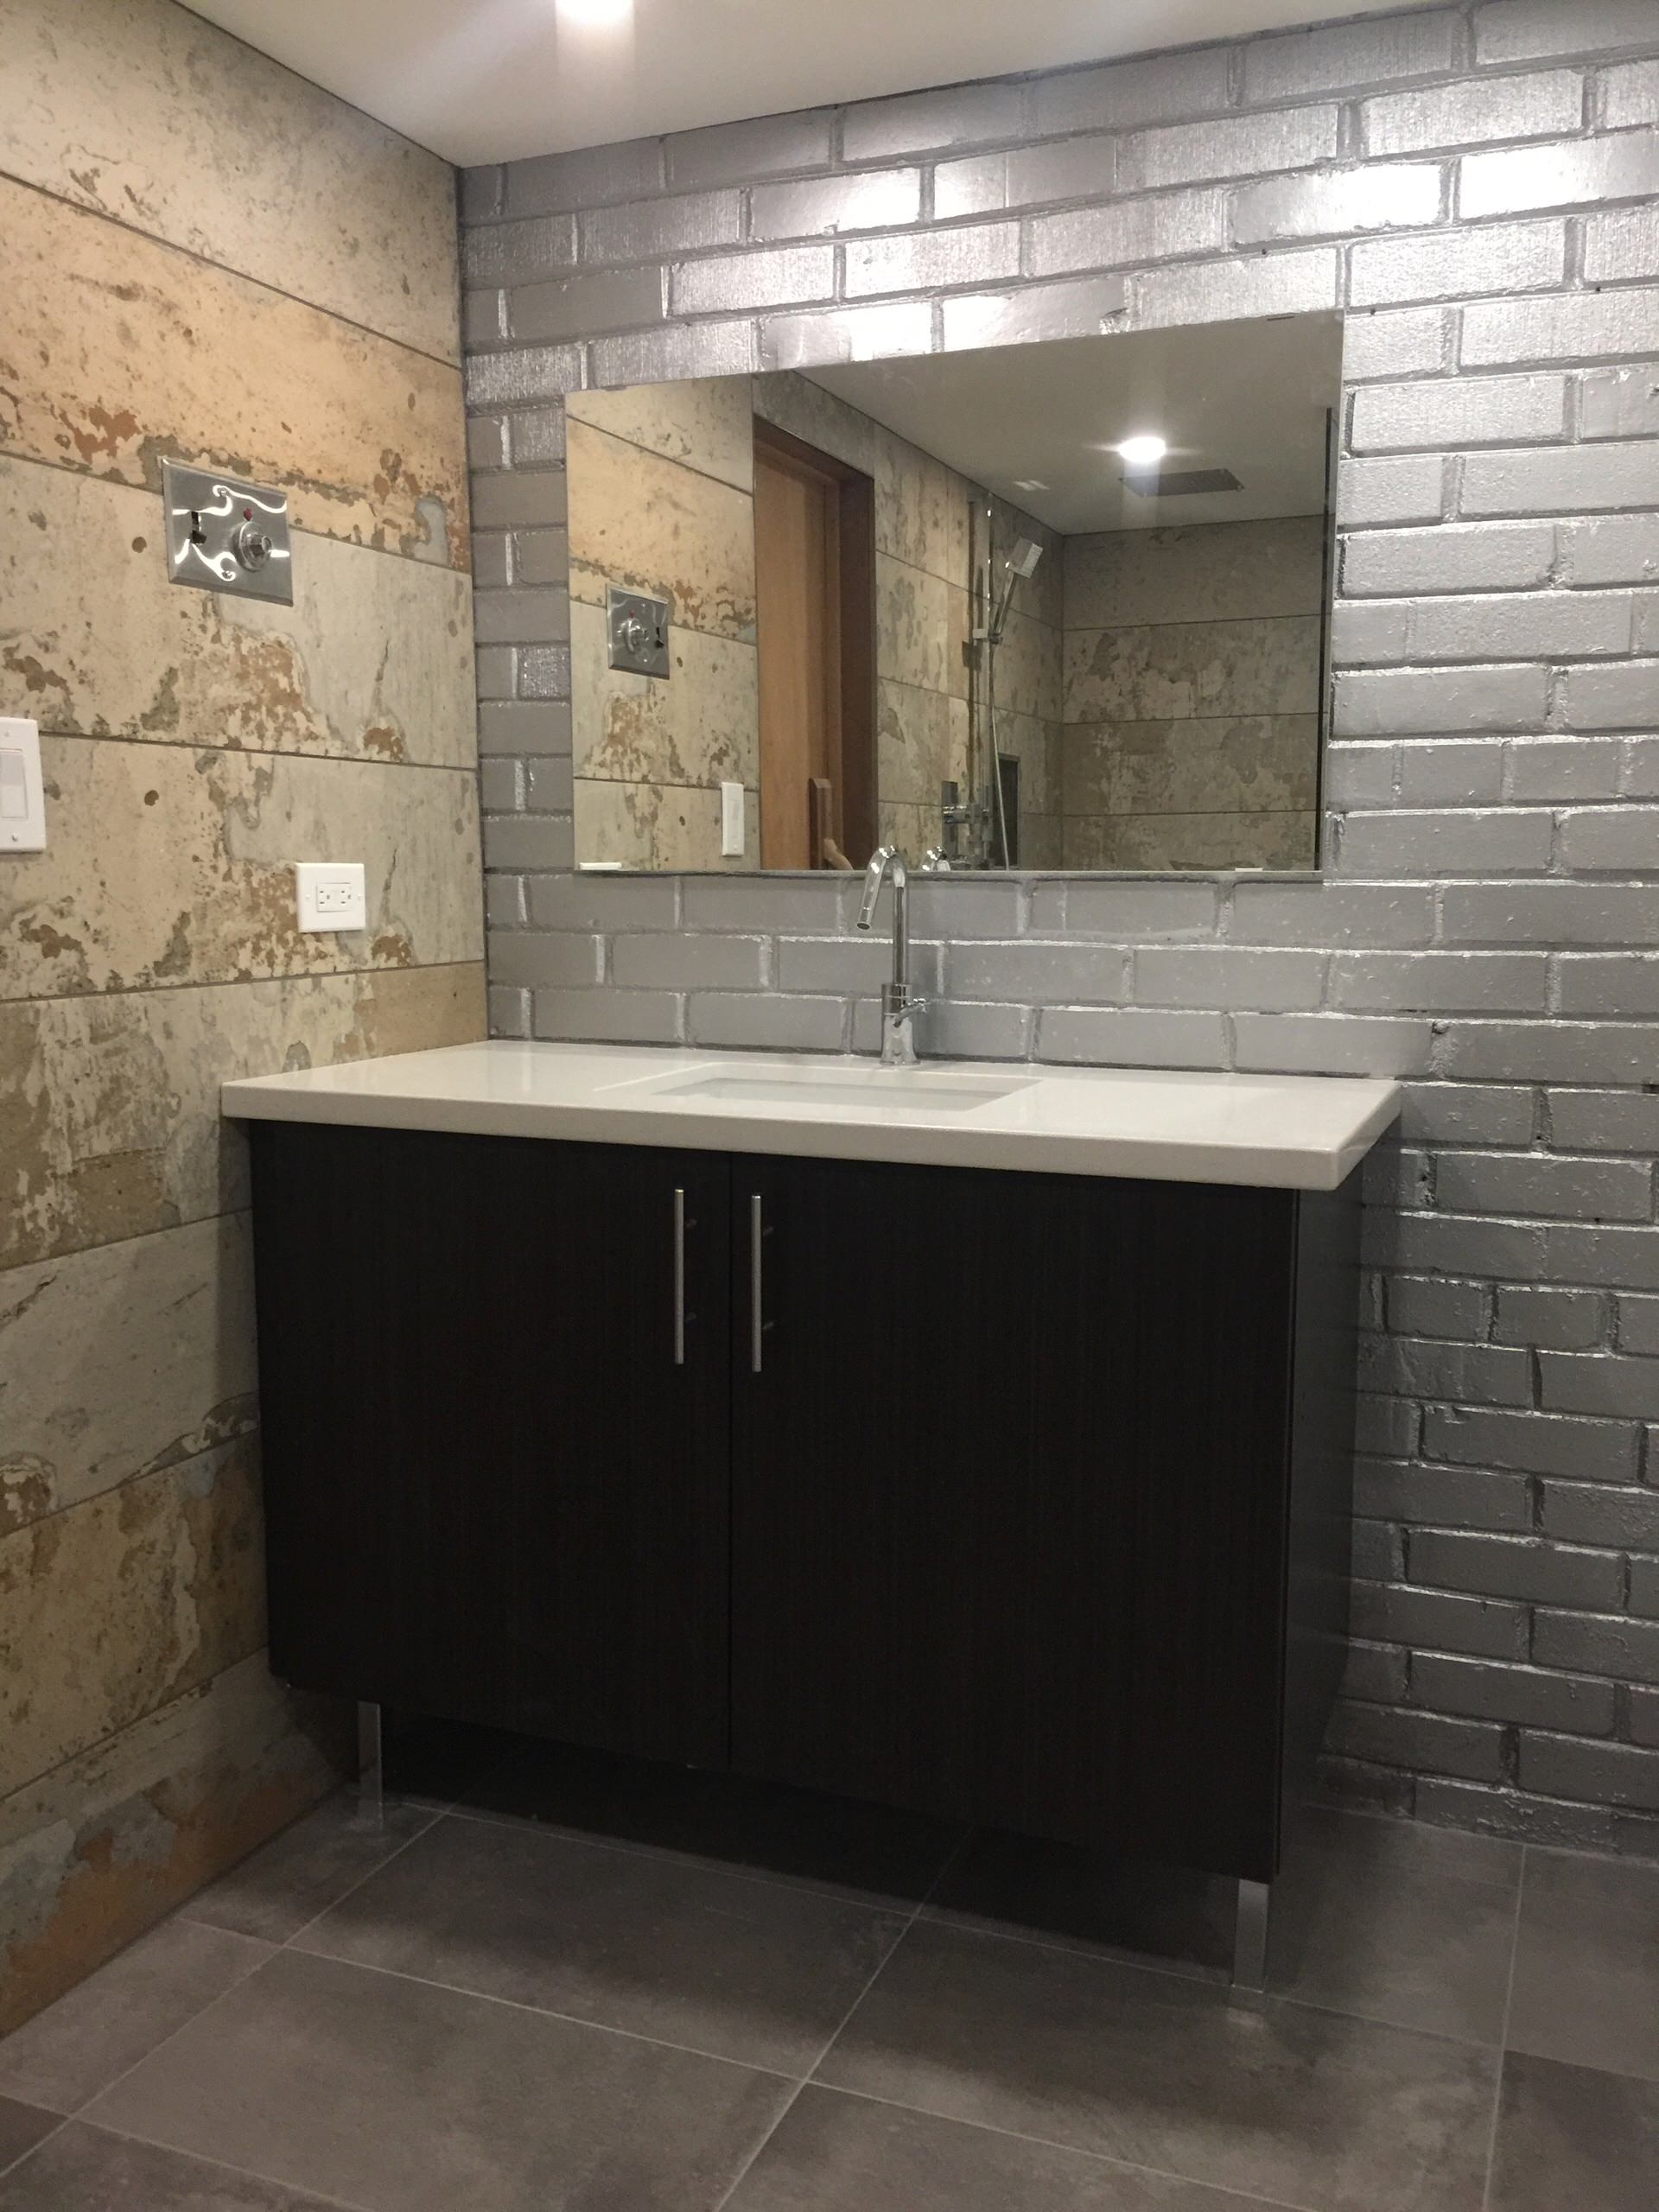 Basement Renovation: Laundry Room&Bathroom